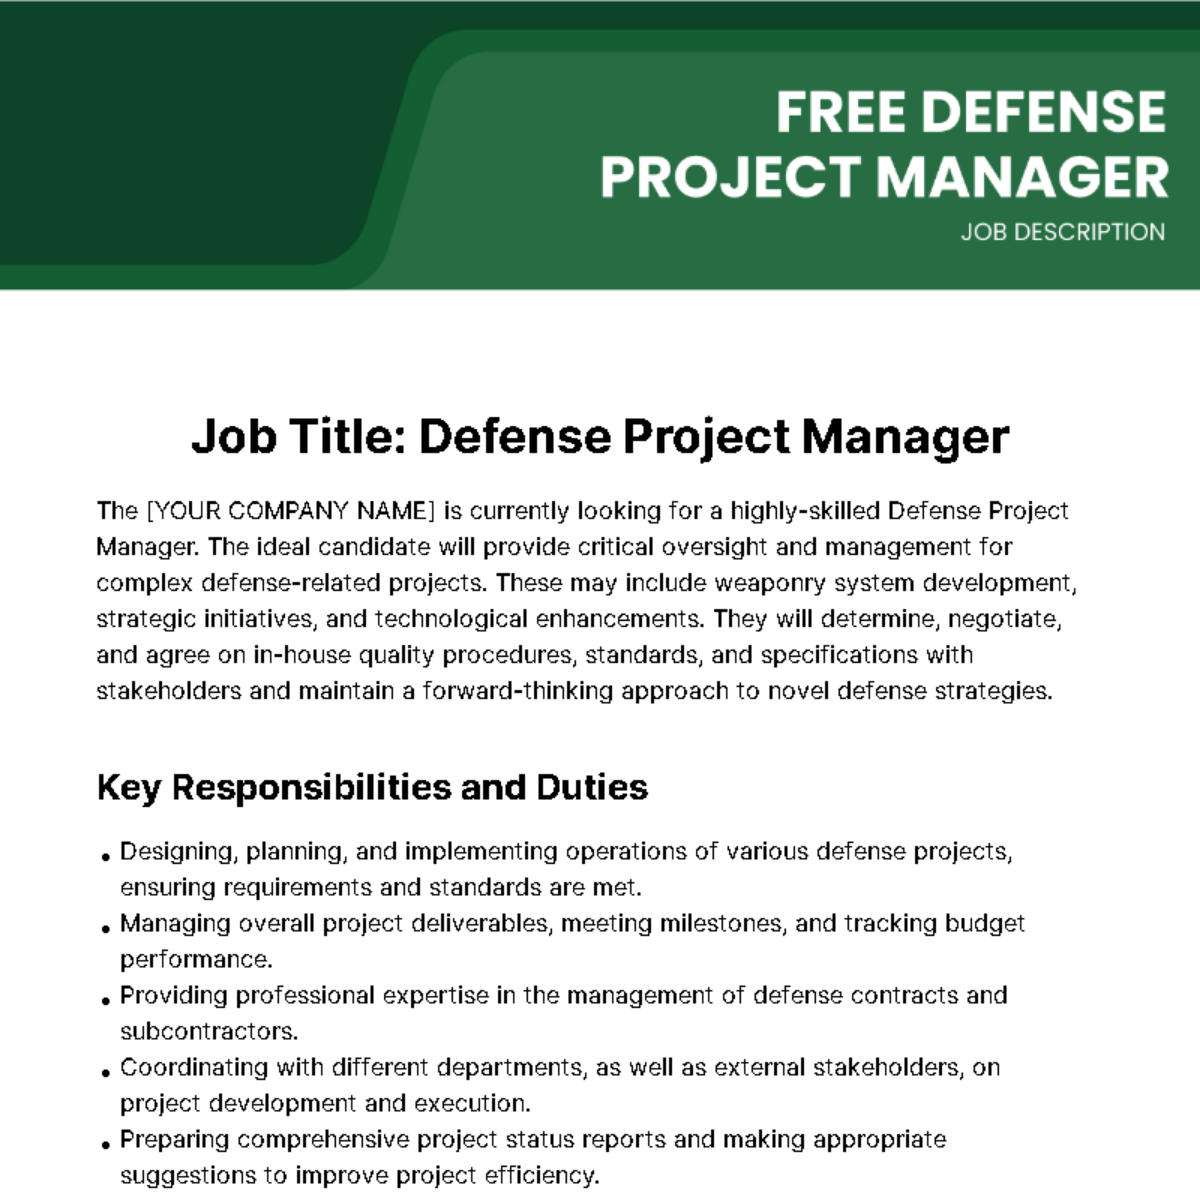 Free Defense Project Manager Job Description Template